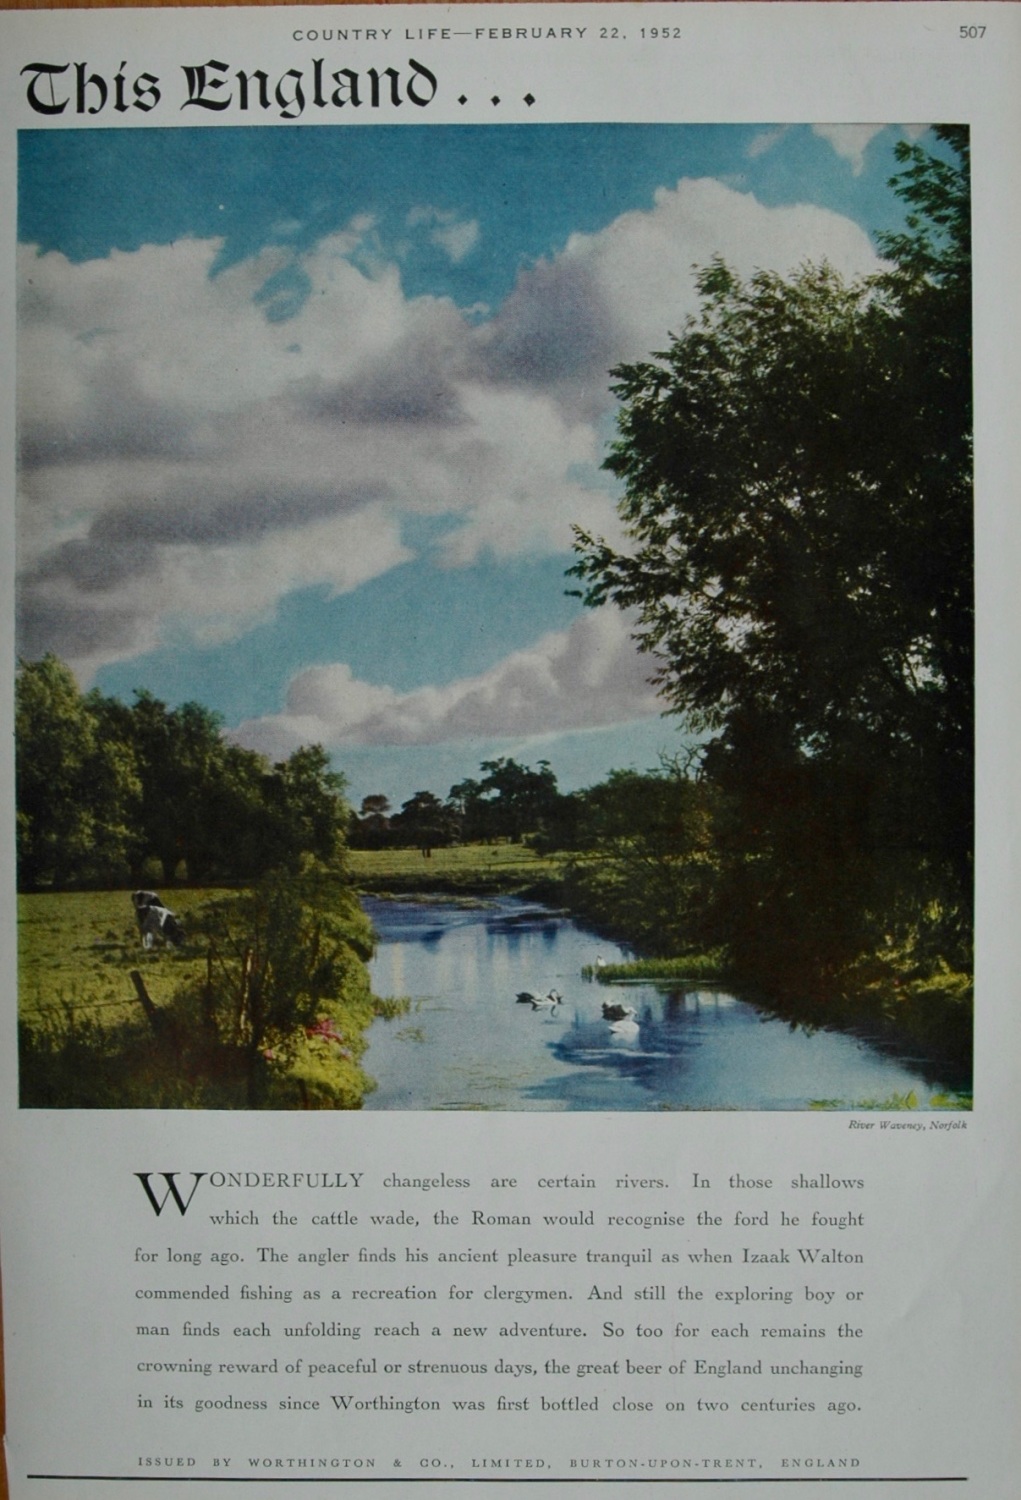 Advert for Worthington & Co